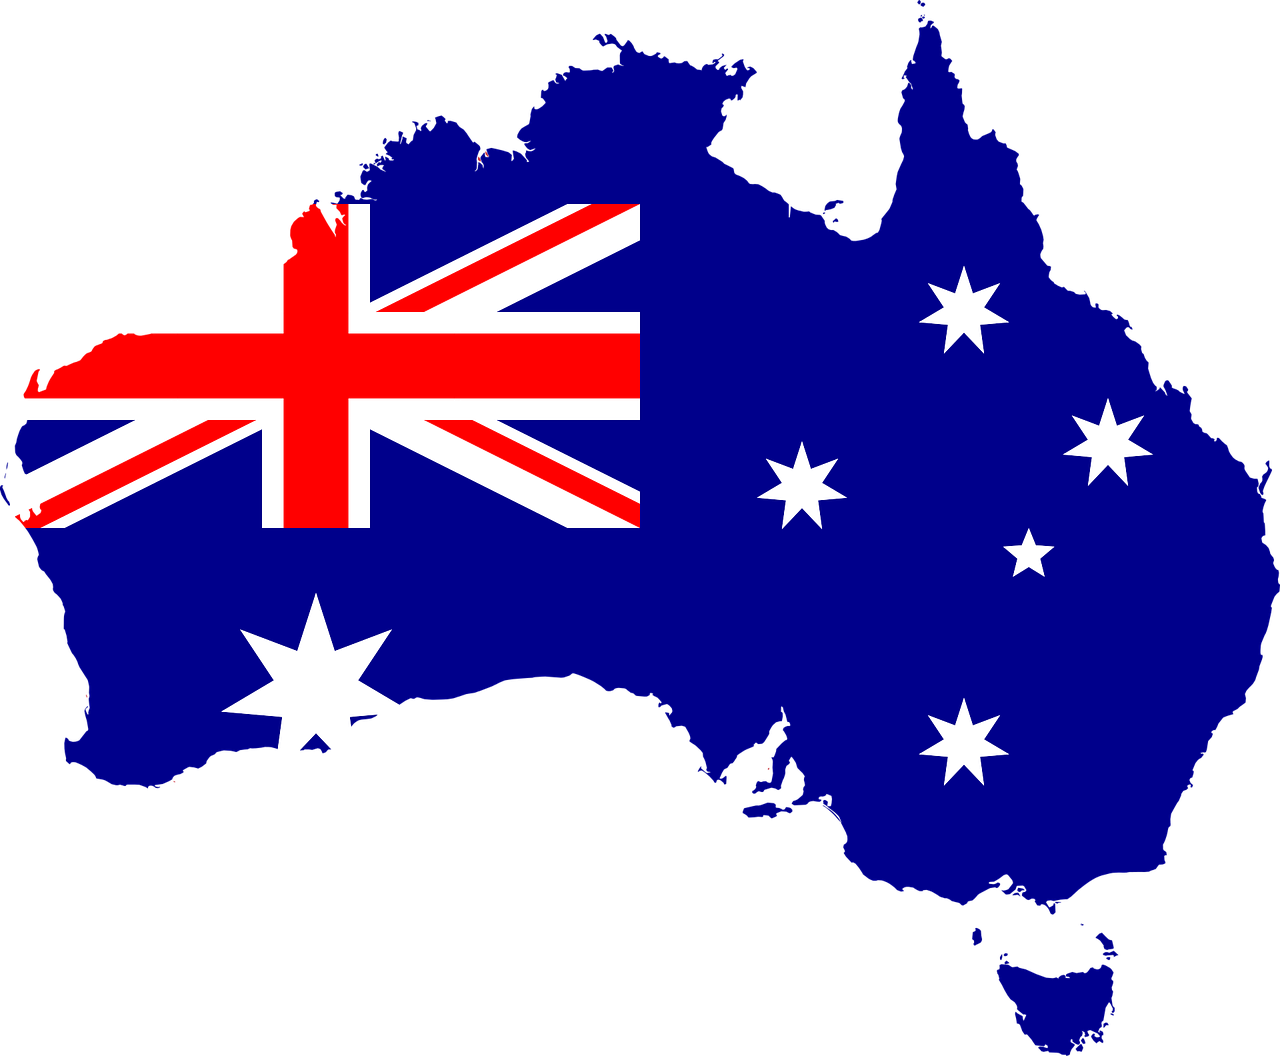 Supporting Australia